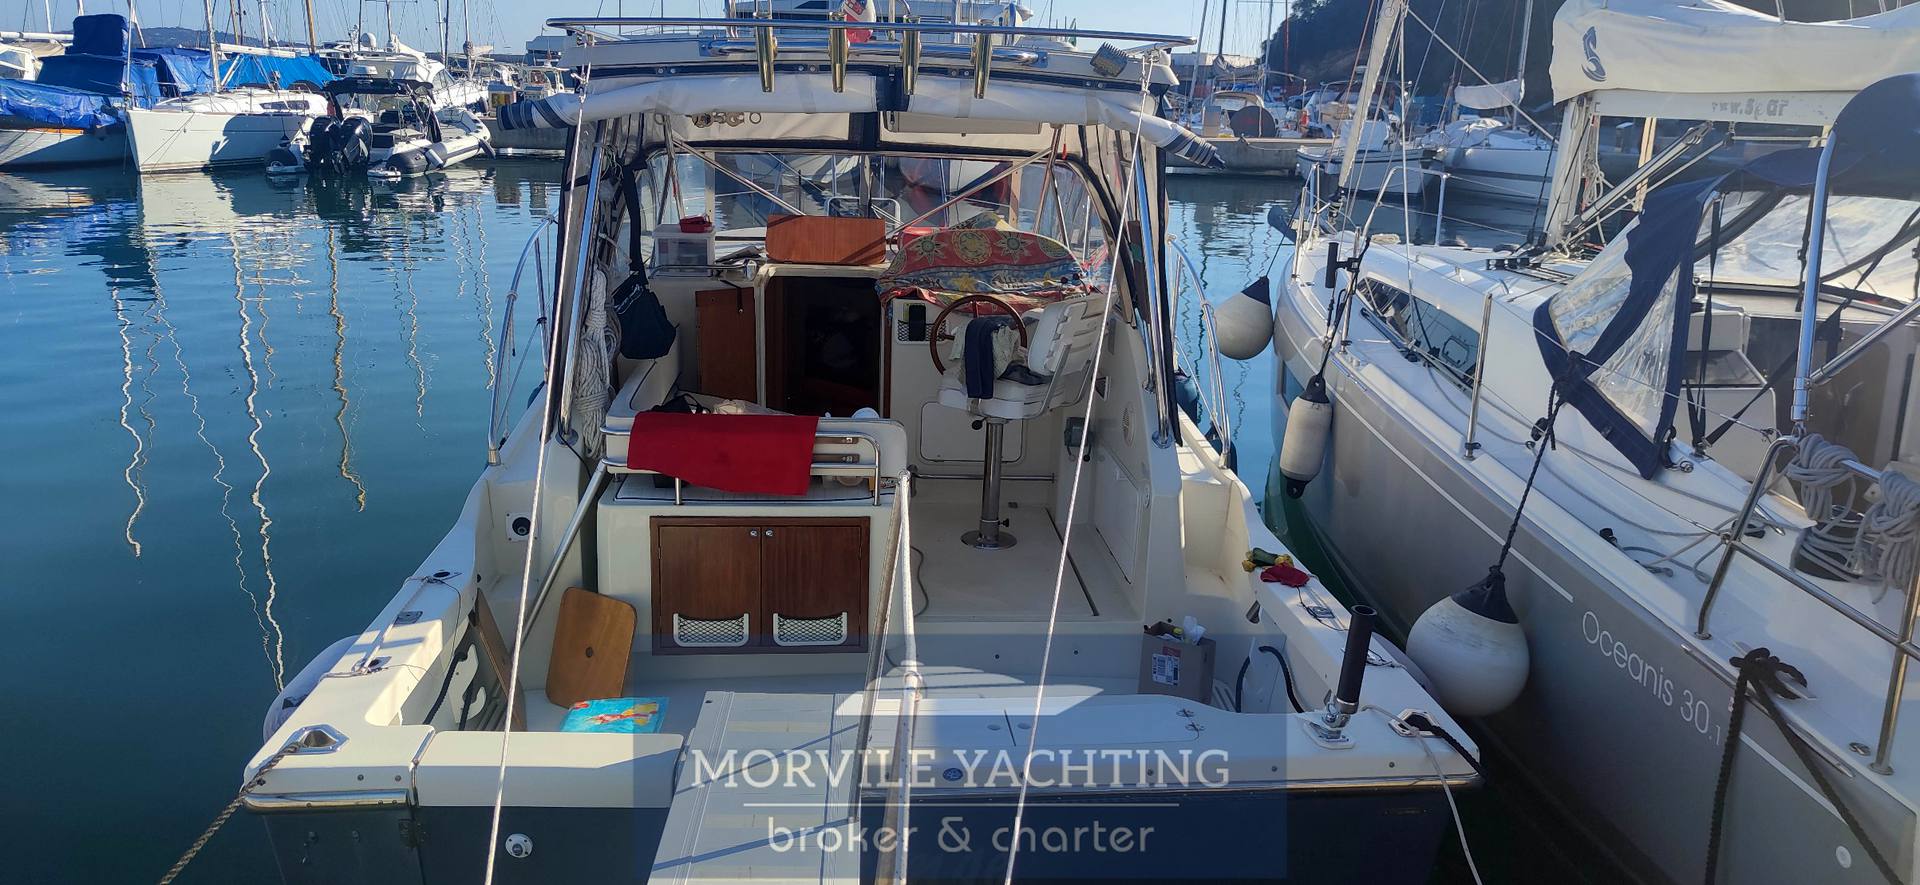 TUCCOLI Moby dick t280 Motorboot gebraucht zum Verkauf